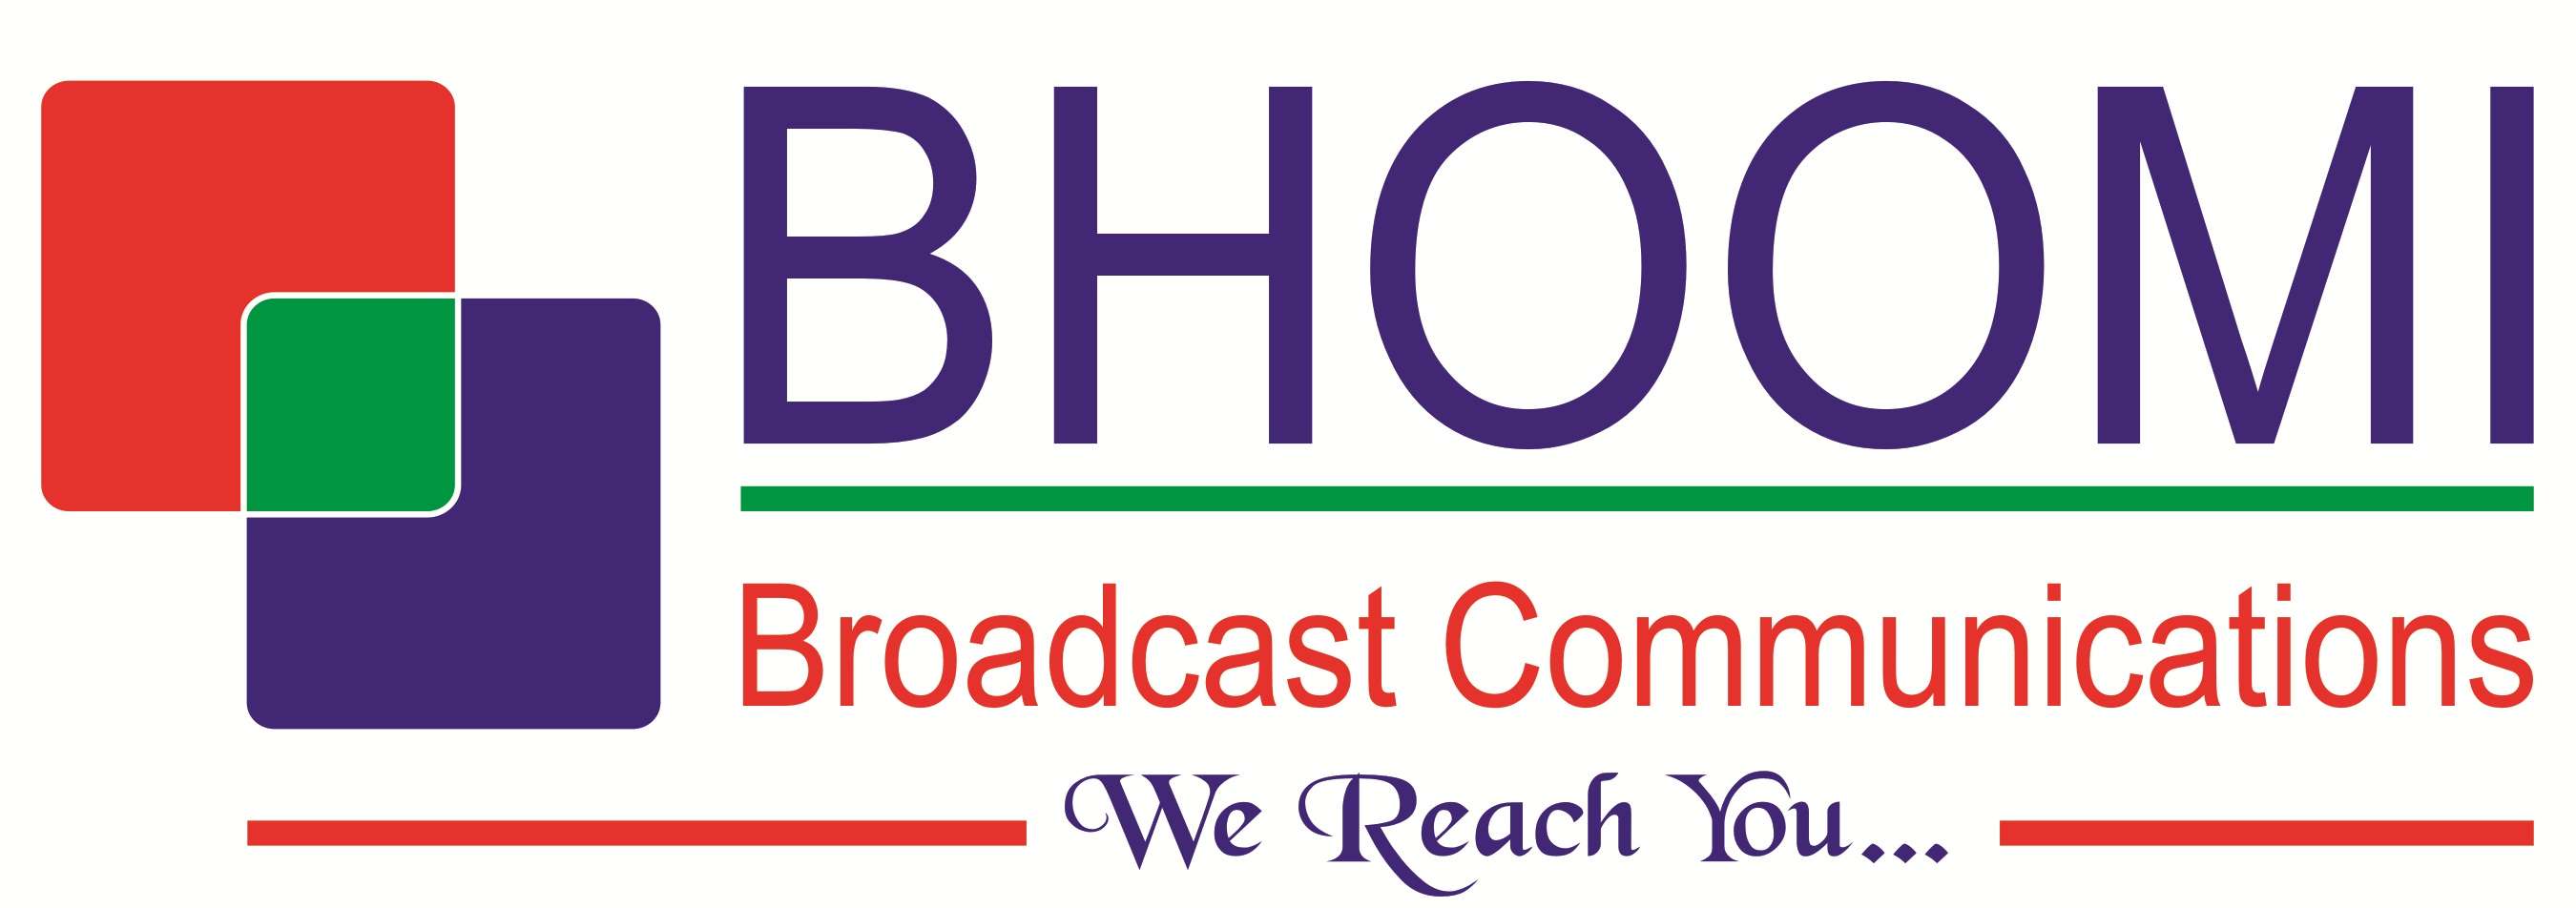 Bhoomi Broadcast Communication